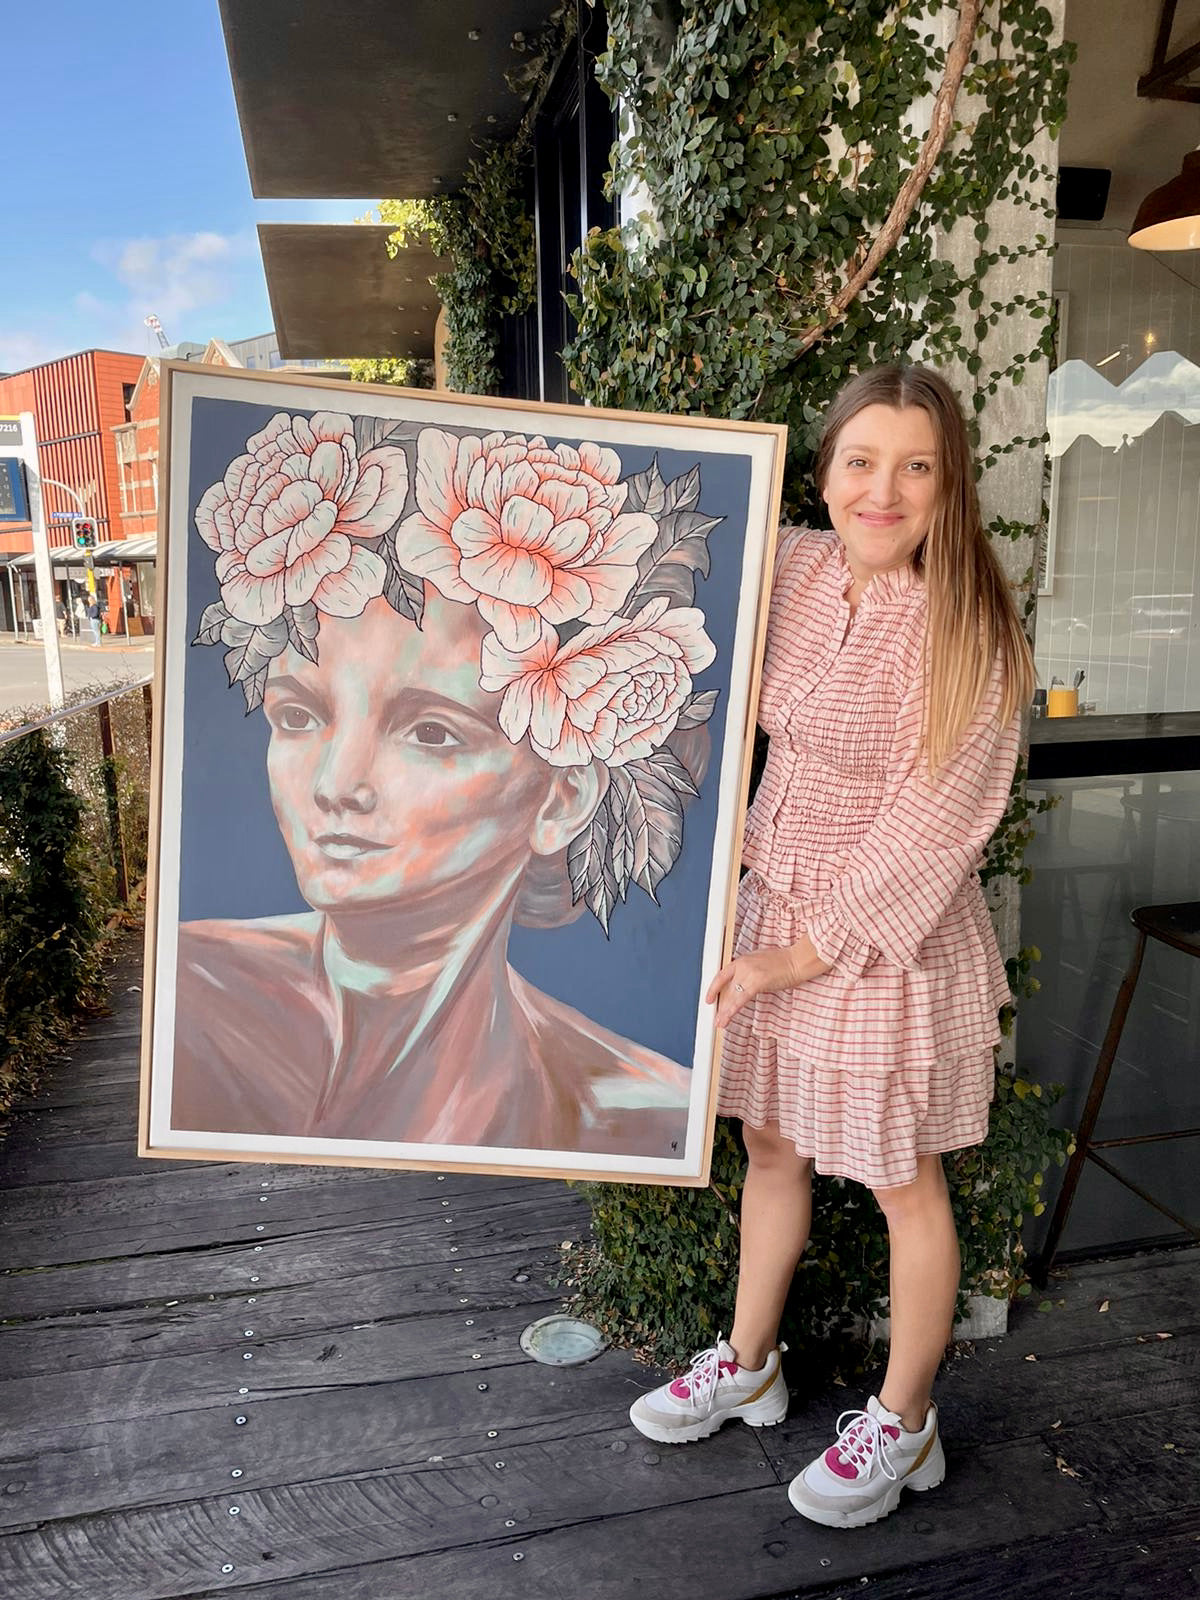 Audrey | Large portrait painting with flowers